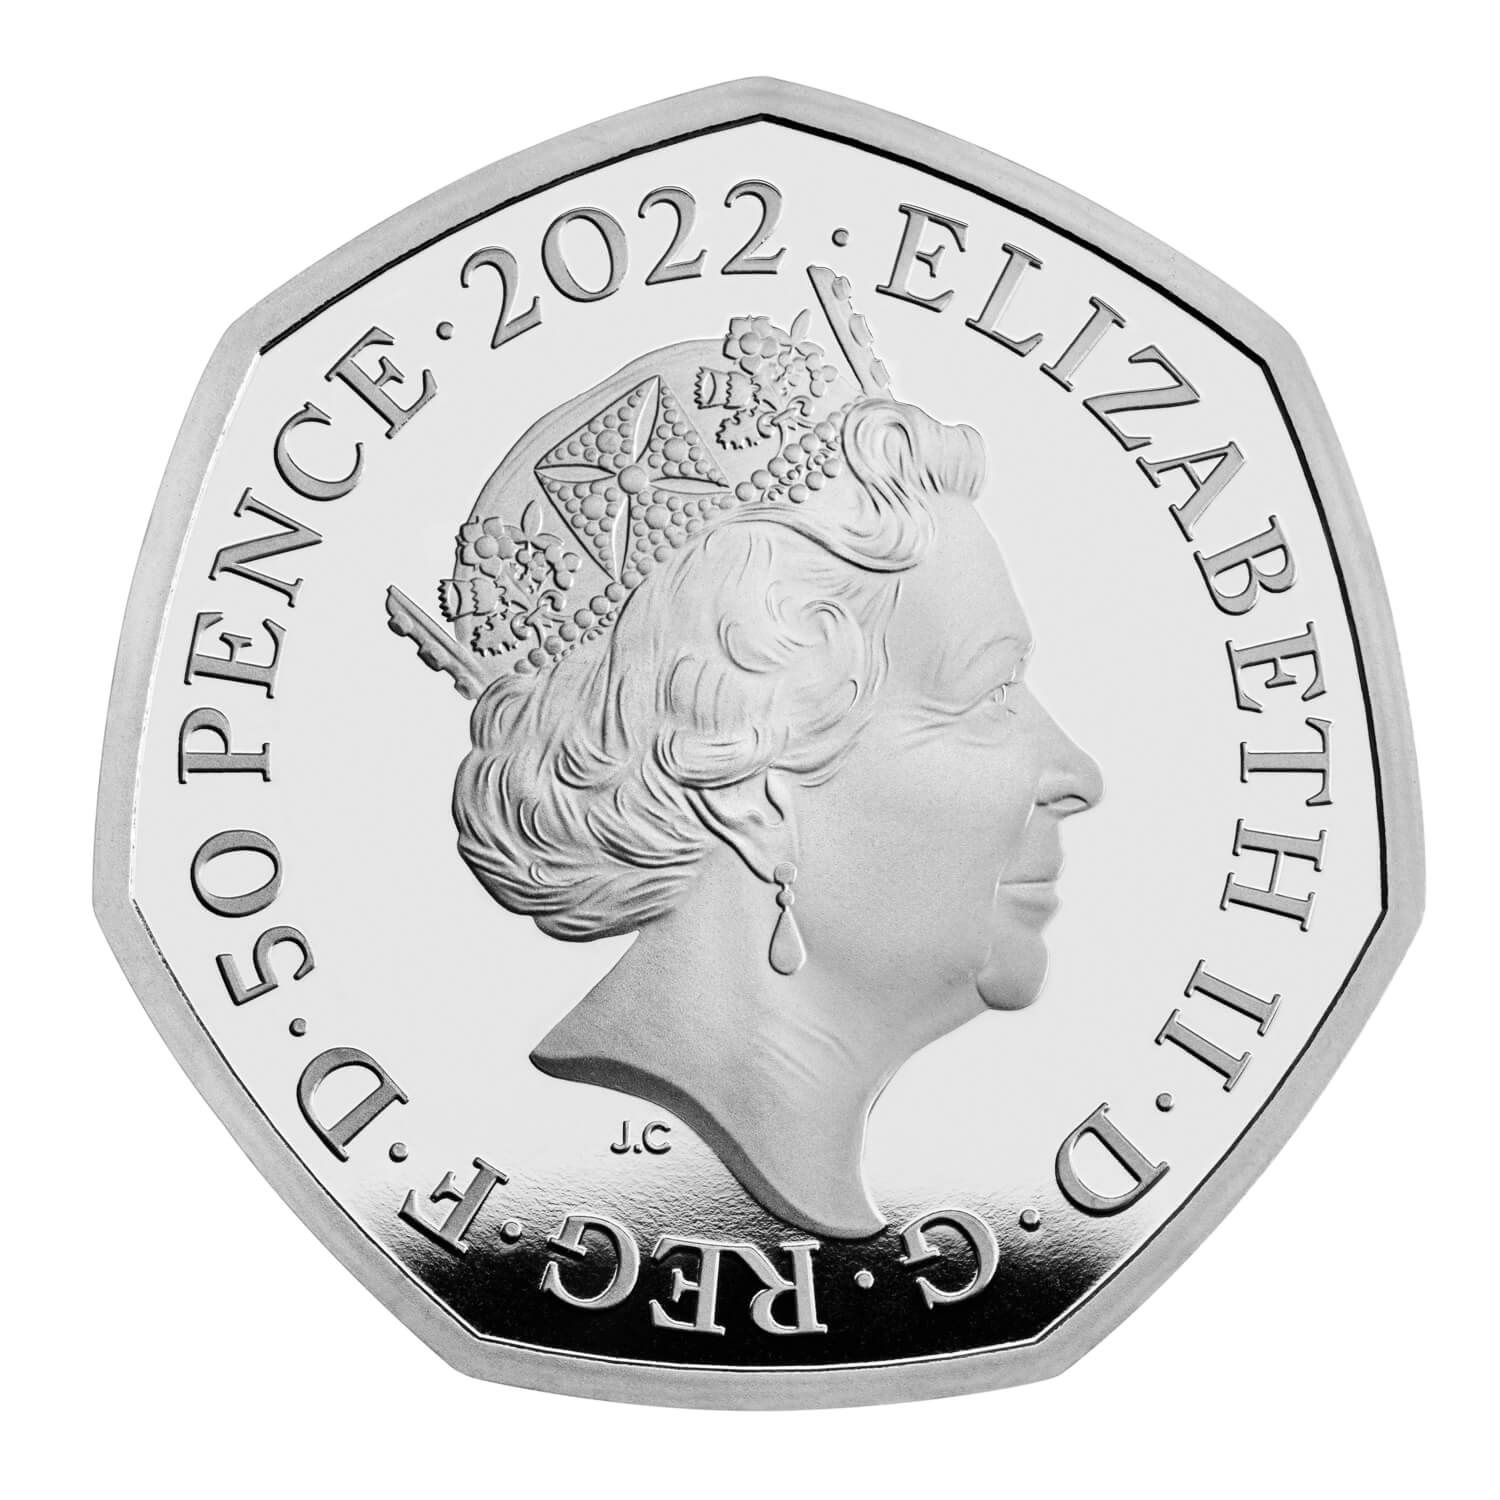 (W185.50.P.2022.UK22CGSP) 50 Pence Birmingham Commonwealth Games 2022 - Proof silver Obverse (zoom)